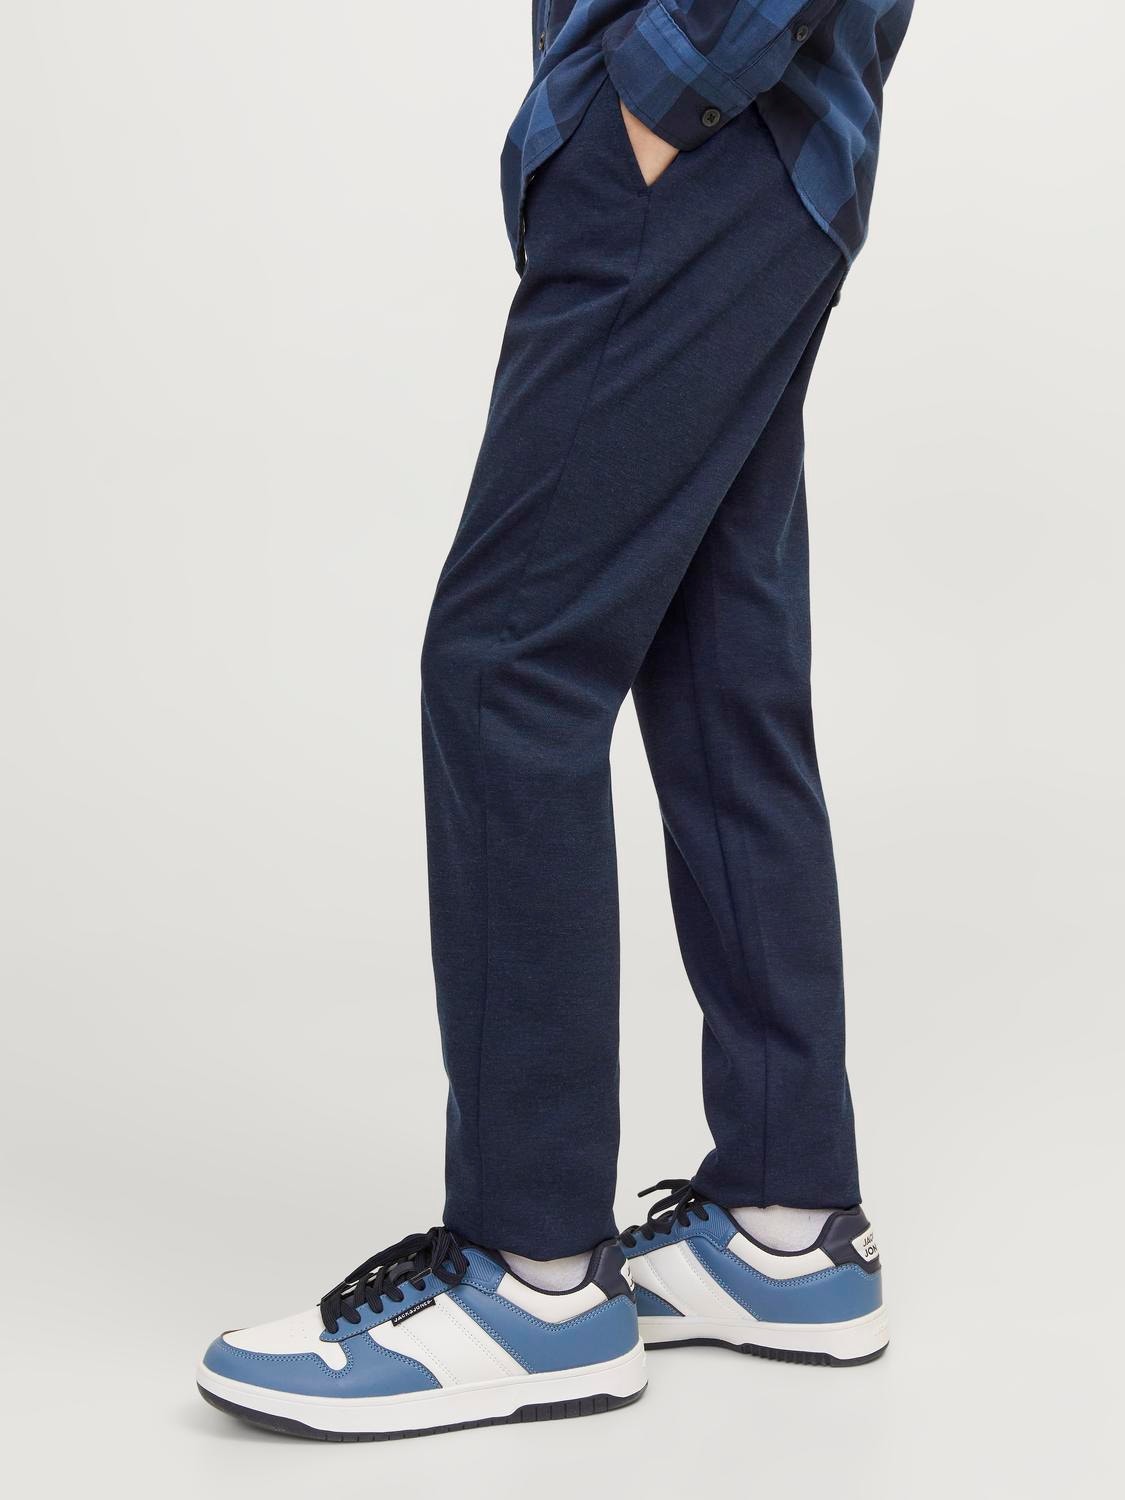 Jack & Jones Slim fit trousers For boys -Navy Blazer - 12249678